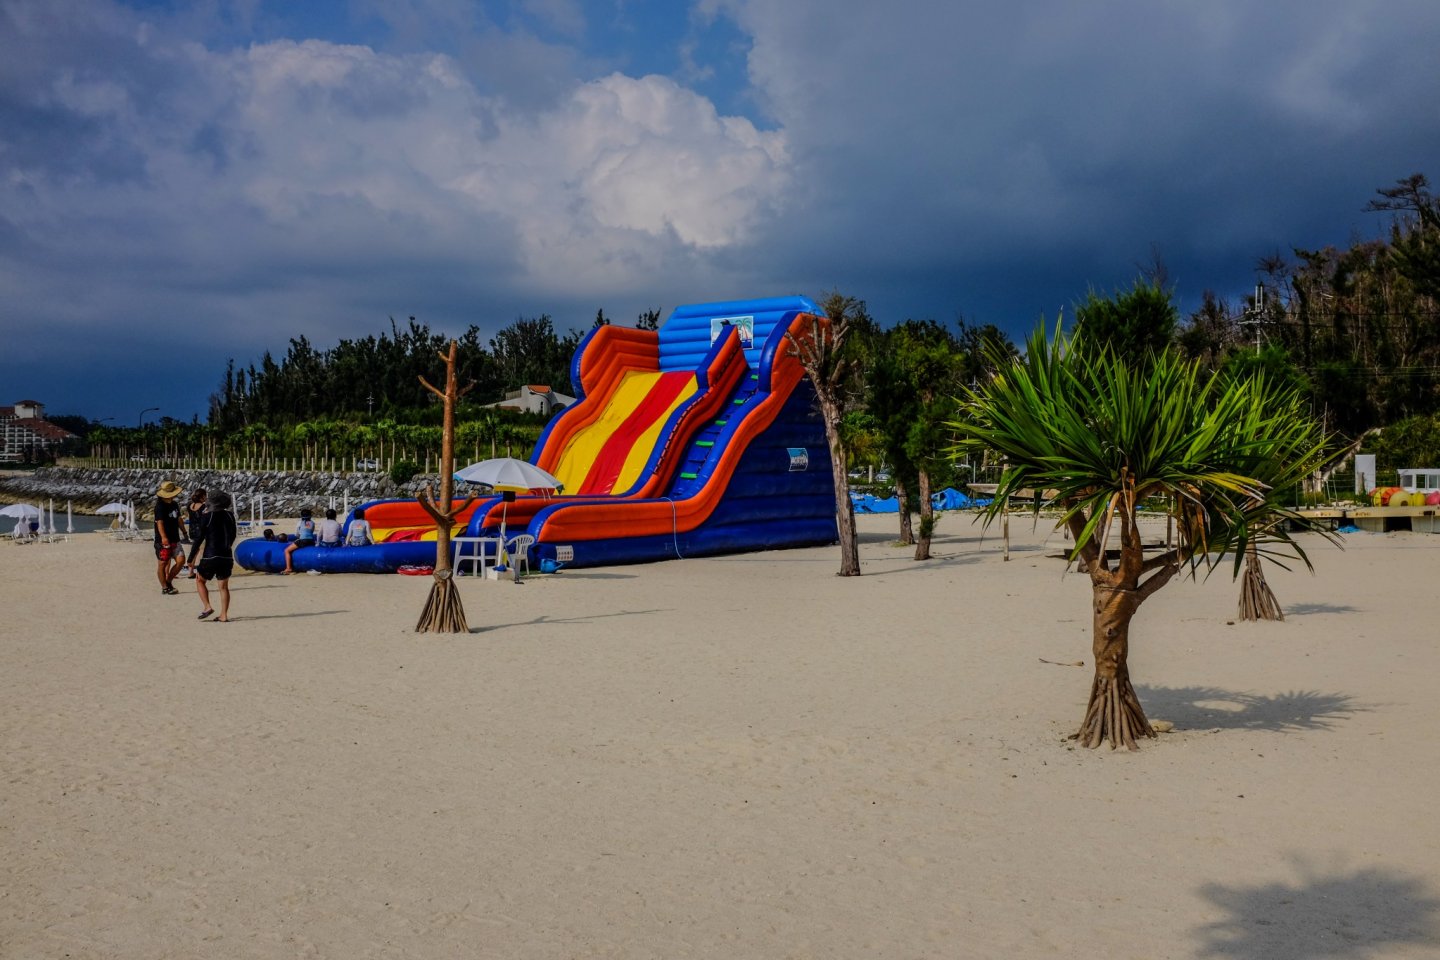 Kariyushi Beach also offers a kids inflatable slide